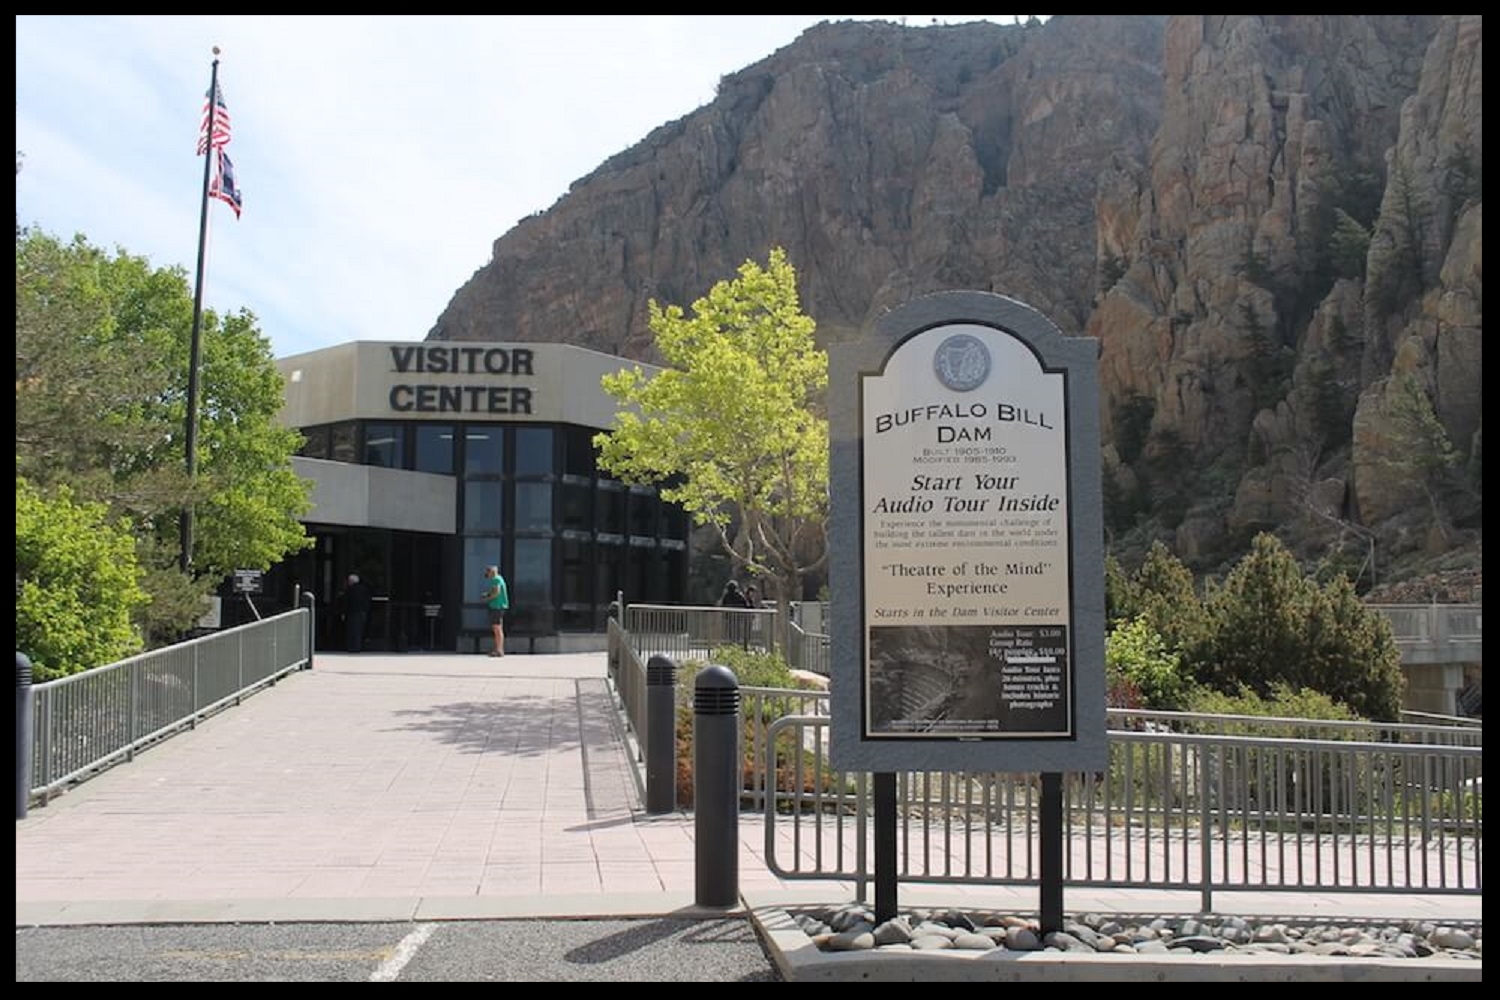 Buffalo Bill Dam & Visitor Center (Cody, WY)